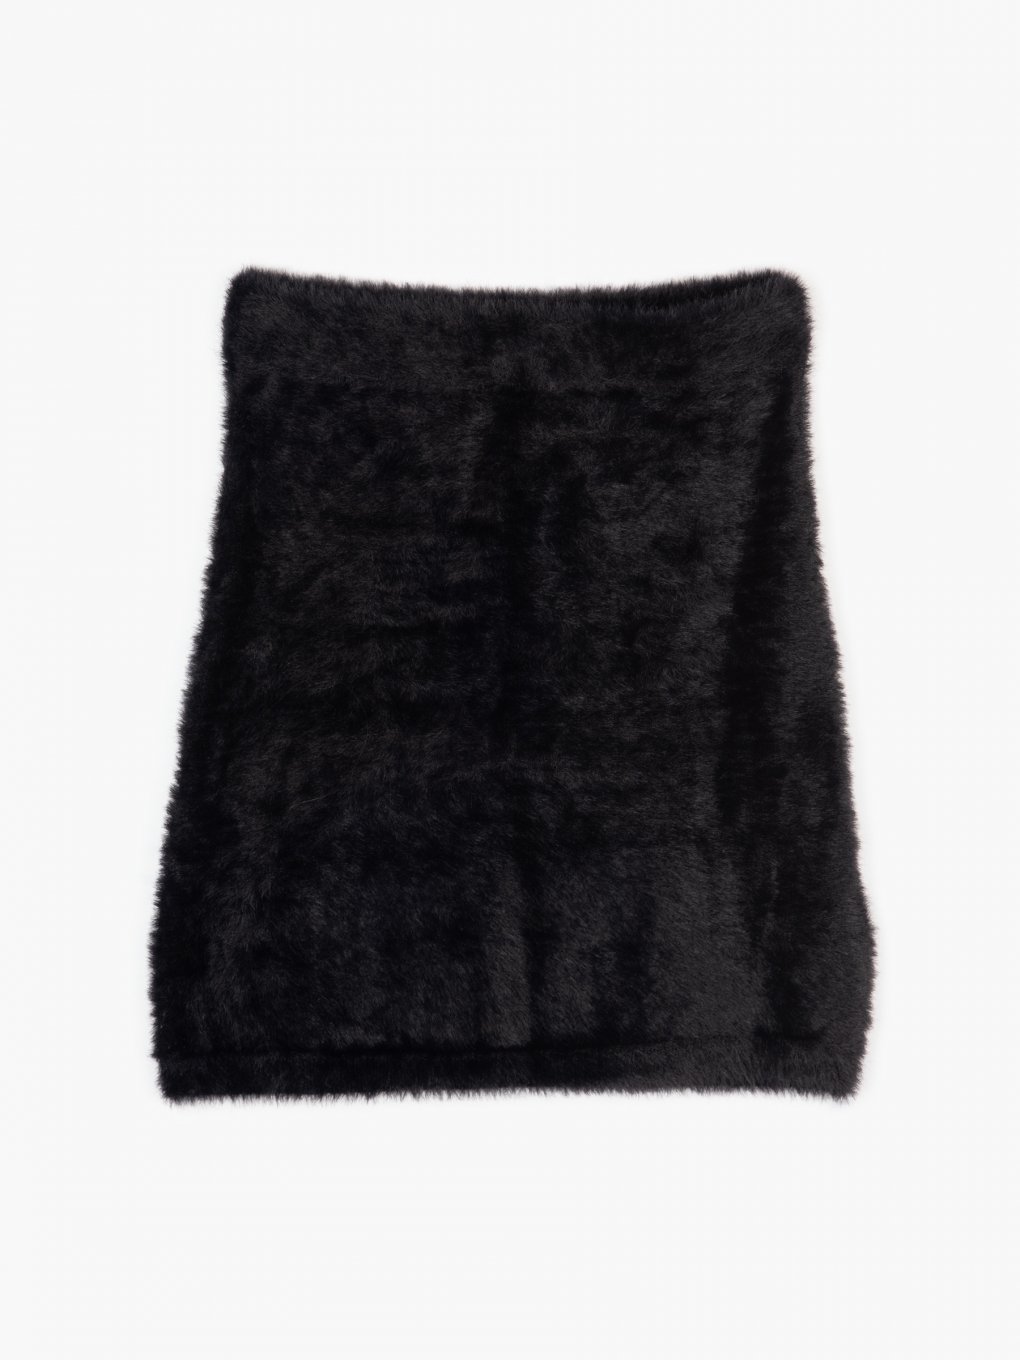 Fuzzy skirt